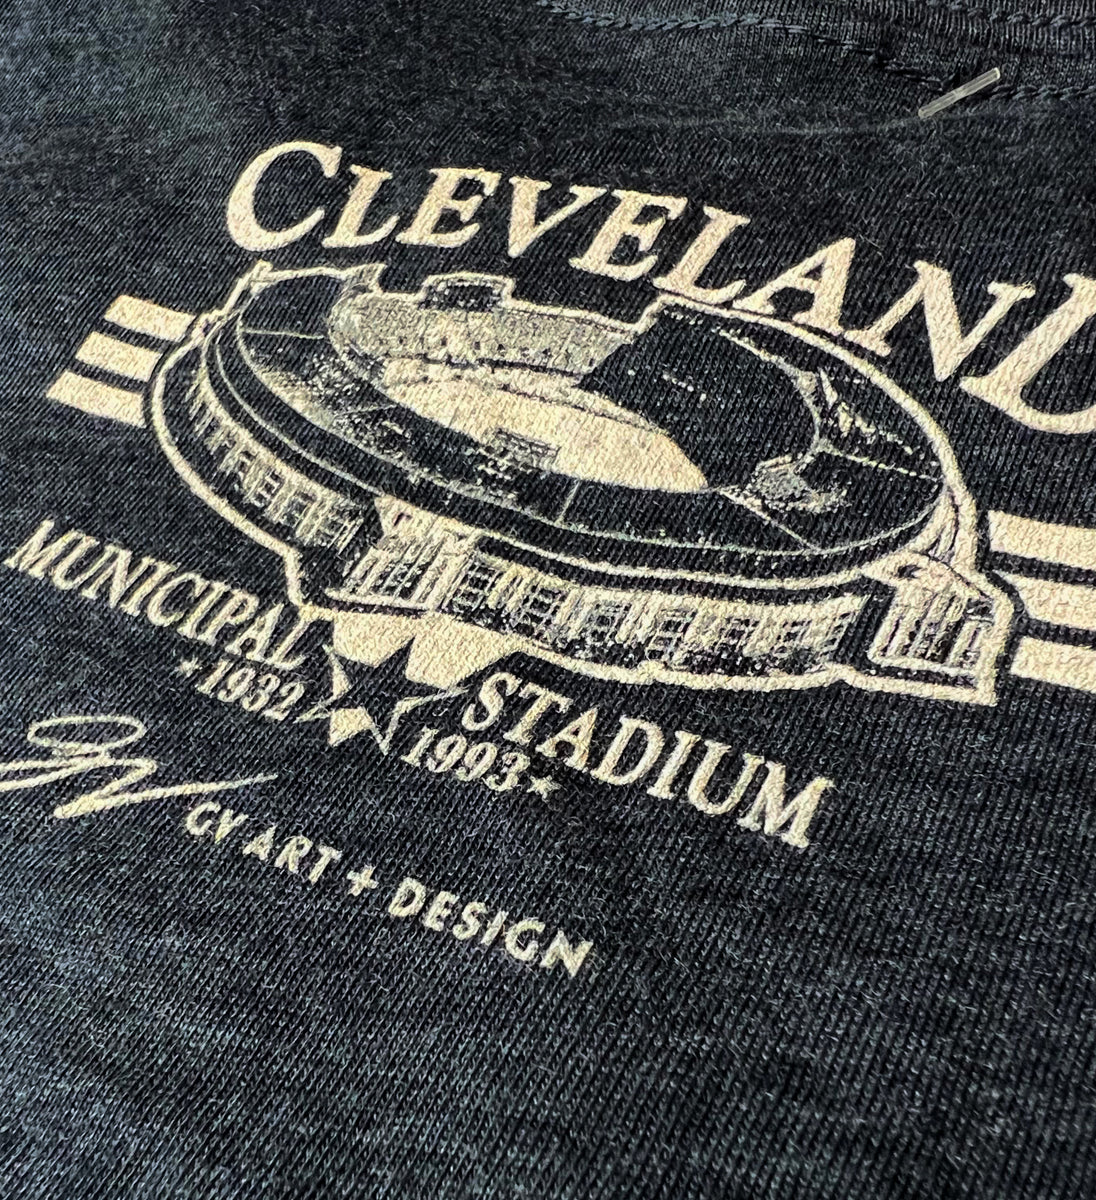 GV Art and Design Cleveland Baseball for Life Tour T Shirt 4XLarge